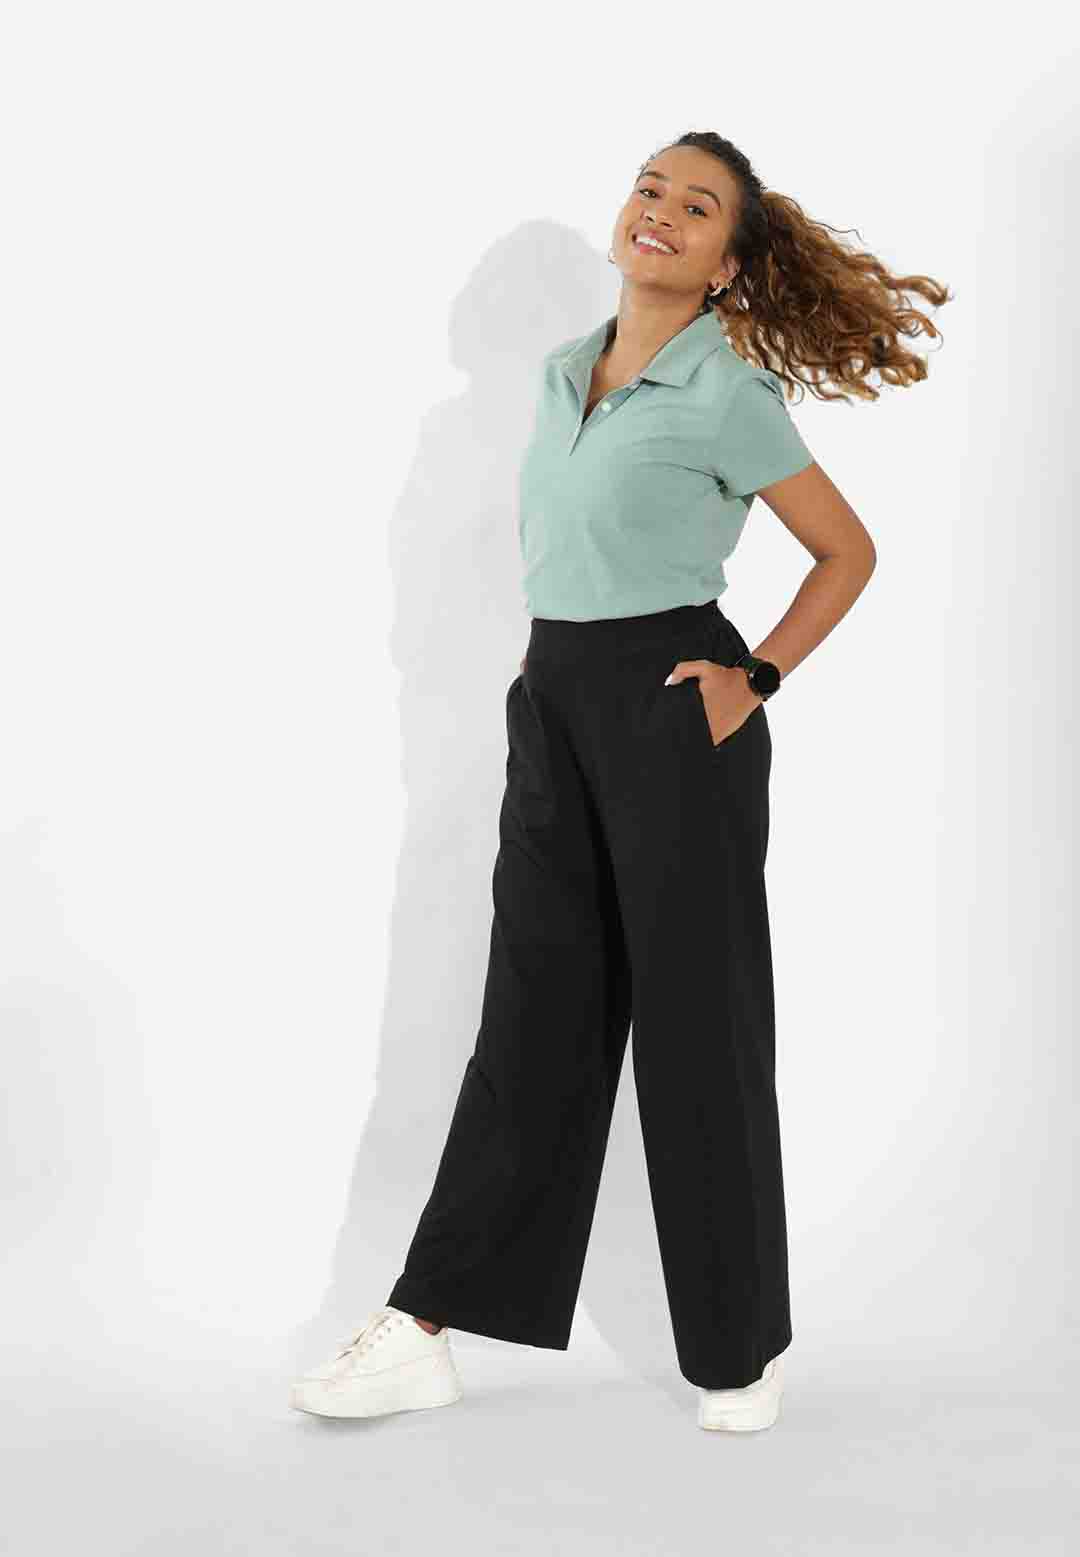 Buy BlissClub Women Werk-It Flare Pants, High-Rise, Wide Waistband, Lightweight & Breathable CottonFlex Fabric, 4 Pockets, Herringbone Pattern